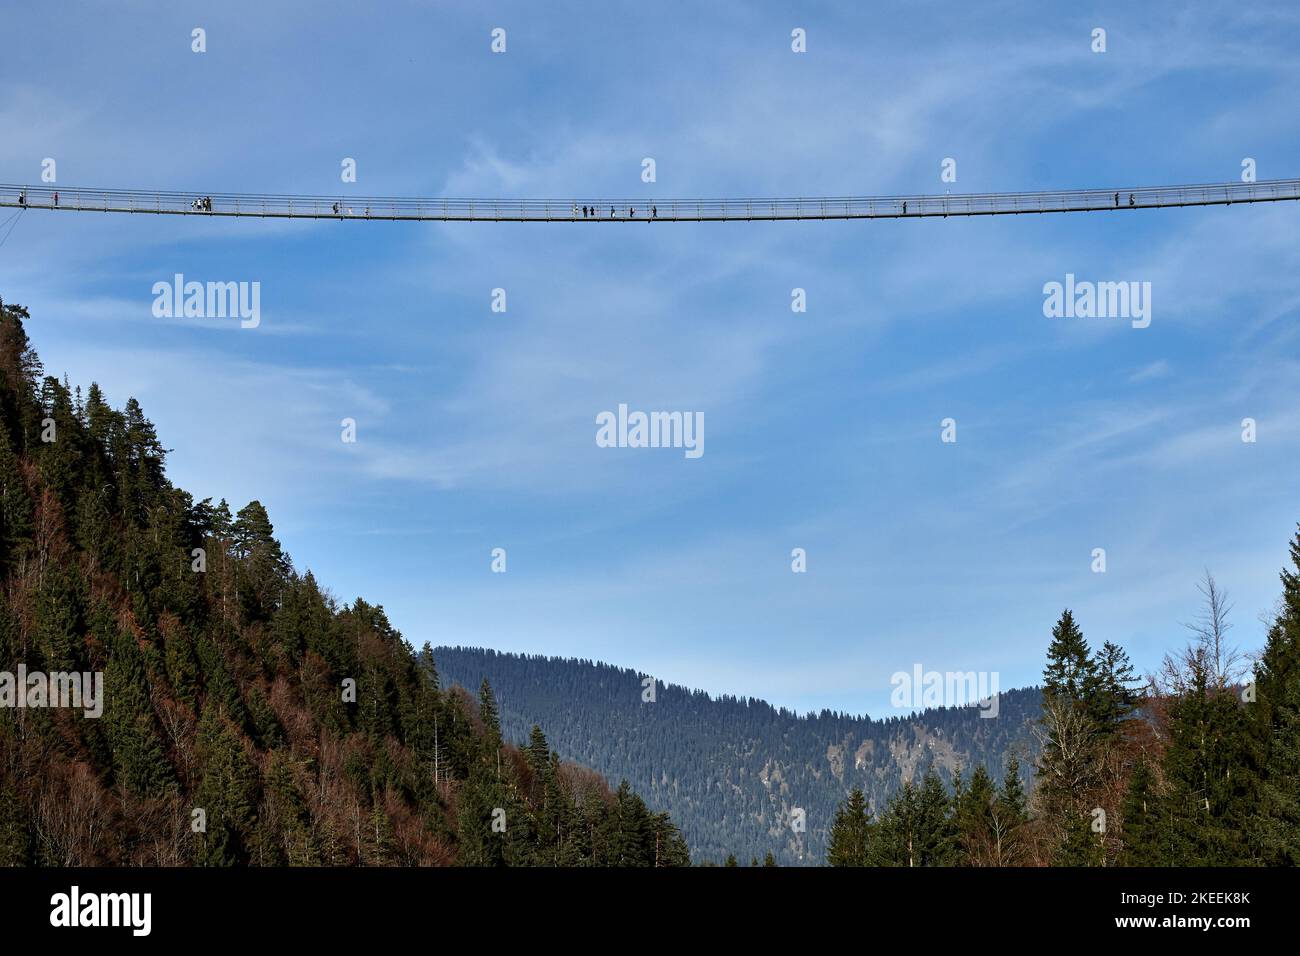 Turistas atrevidos caminando a través del puente colgante Highline179 con fondo azul cielo en Reutte, Tirol, Austria Foto de stock